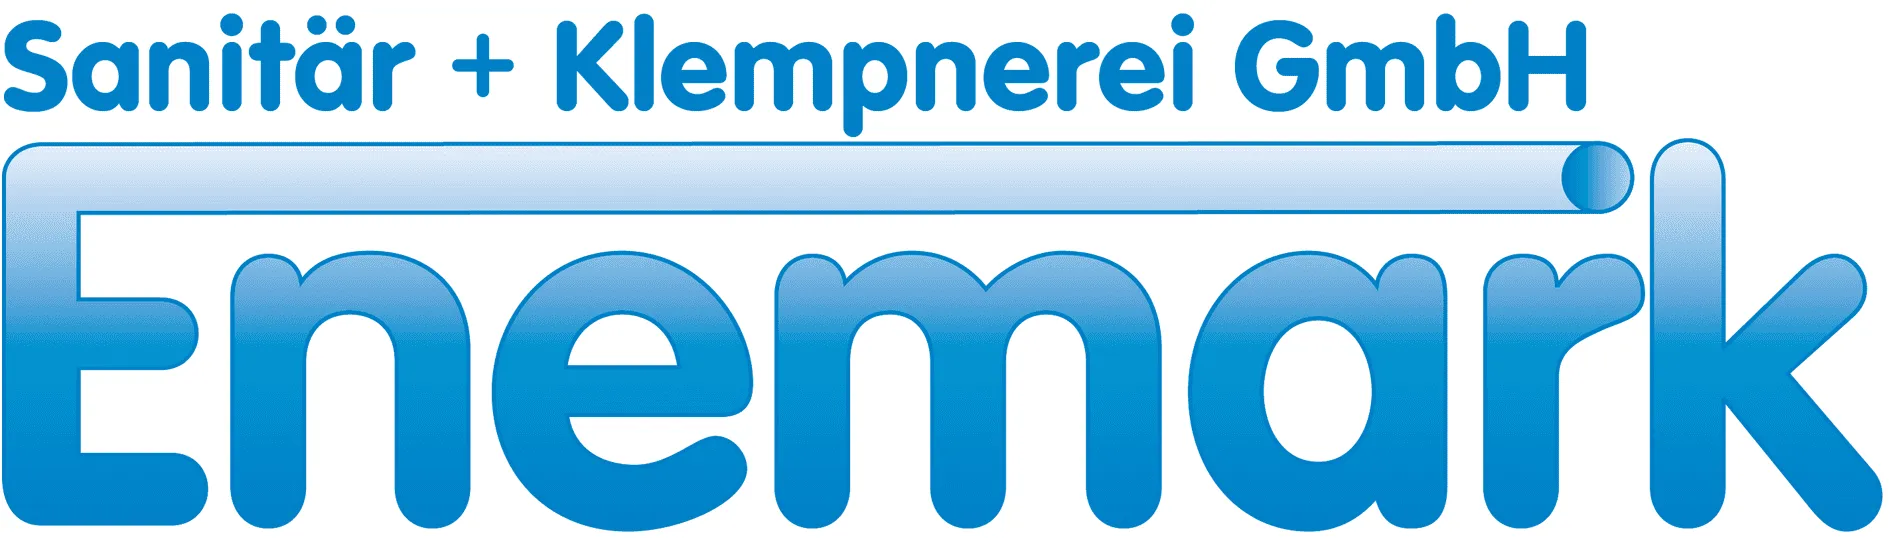 Enemark_Logo_HKS 44.png